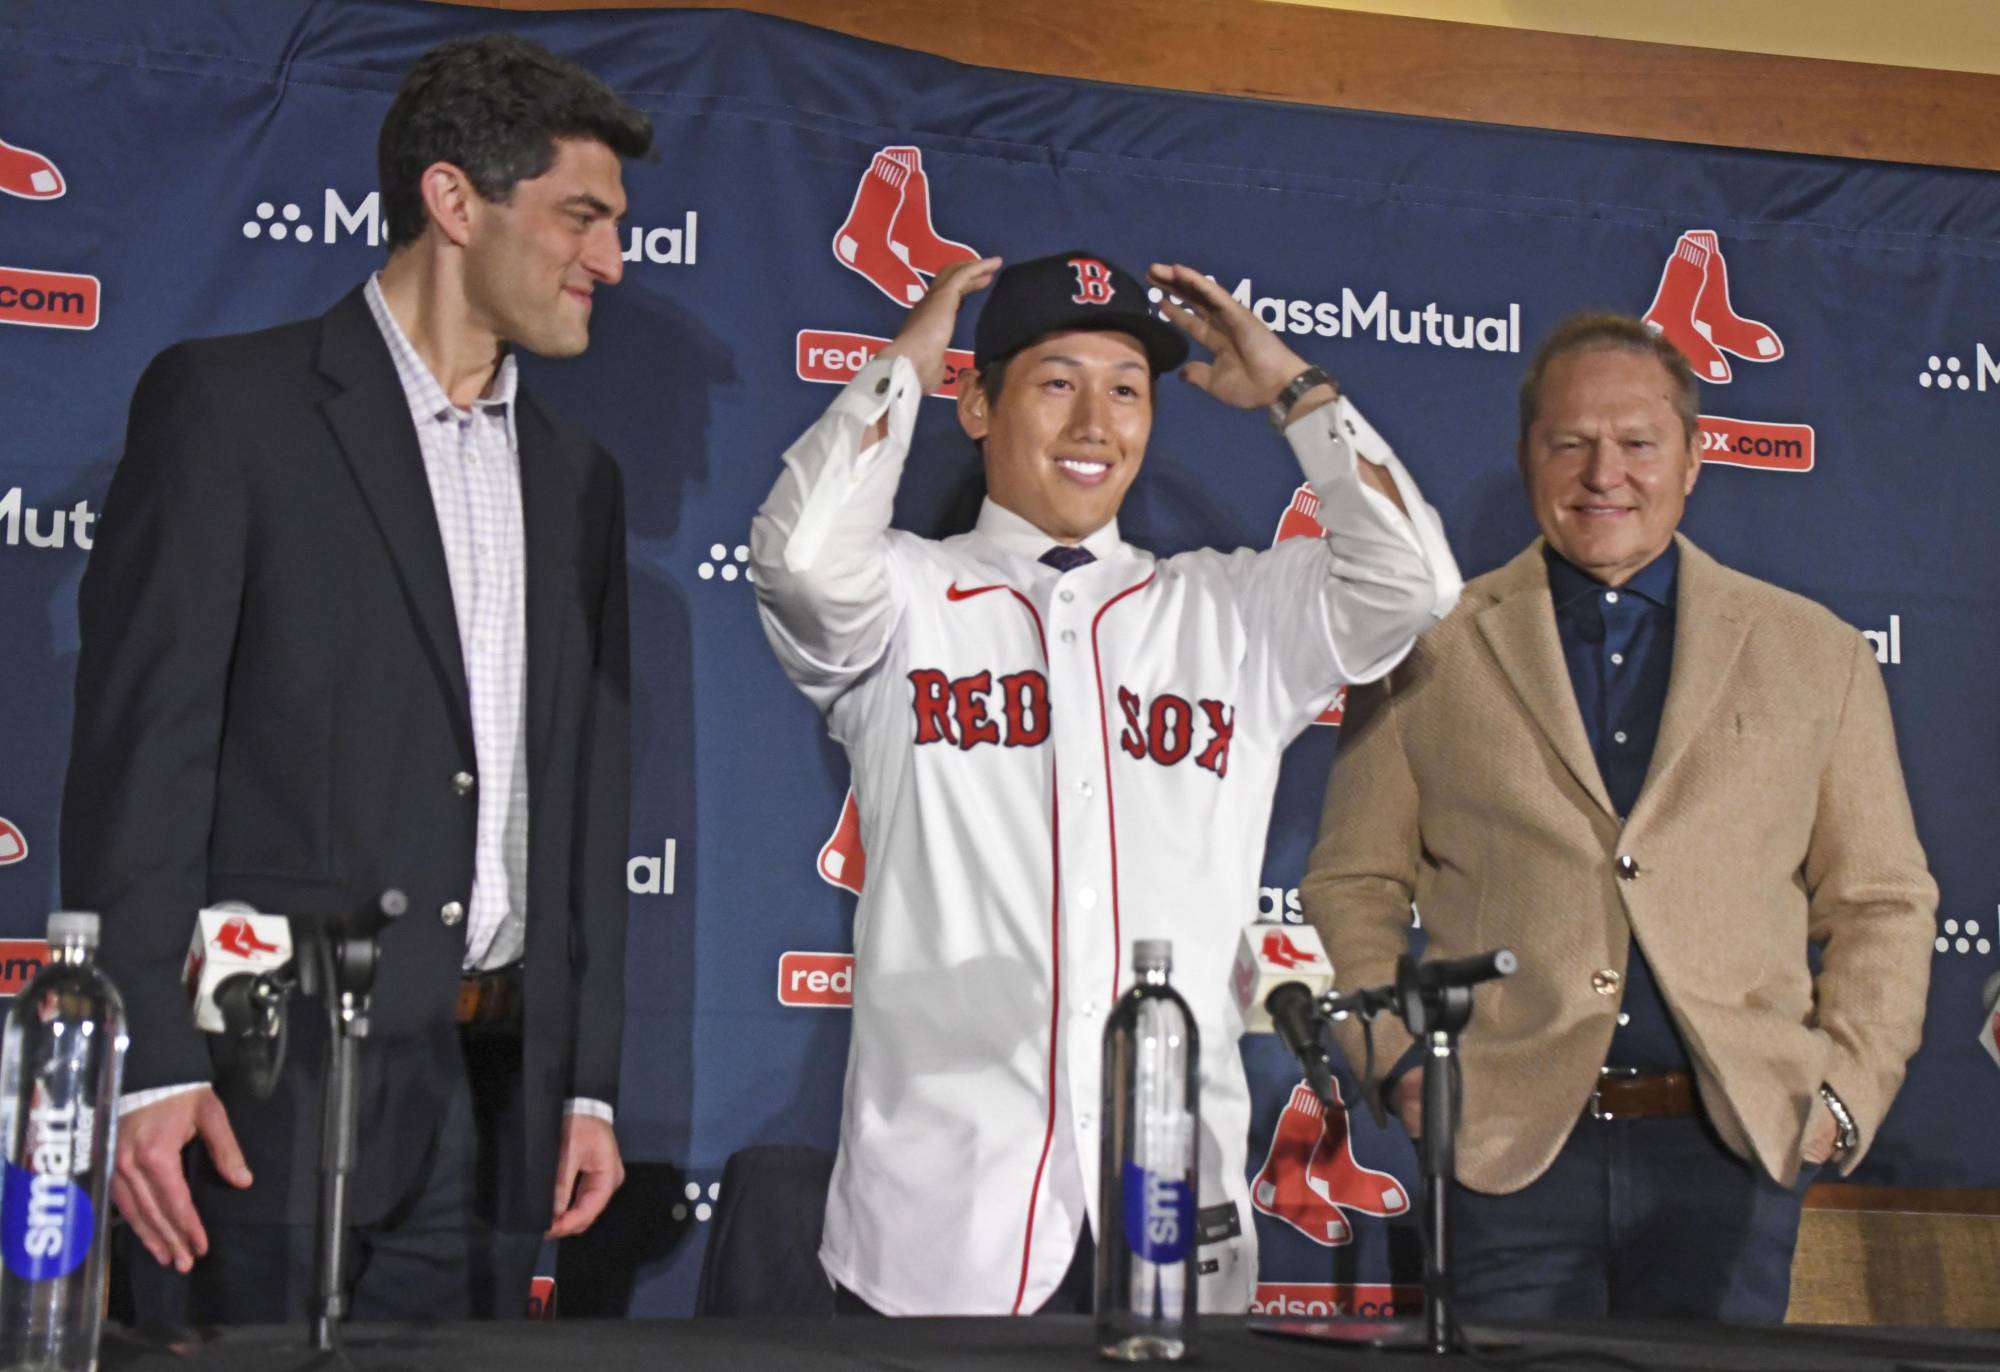 Masataka Yoshida Jersey - Boston Red Sox Replica Adult Home Jersey